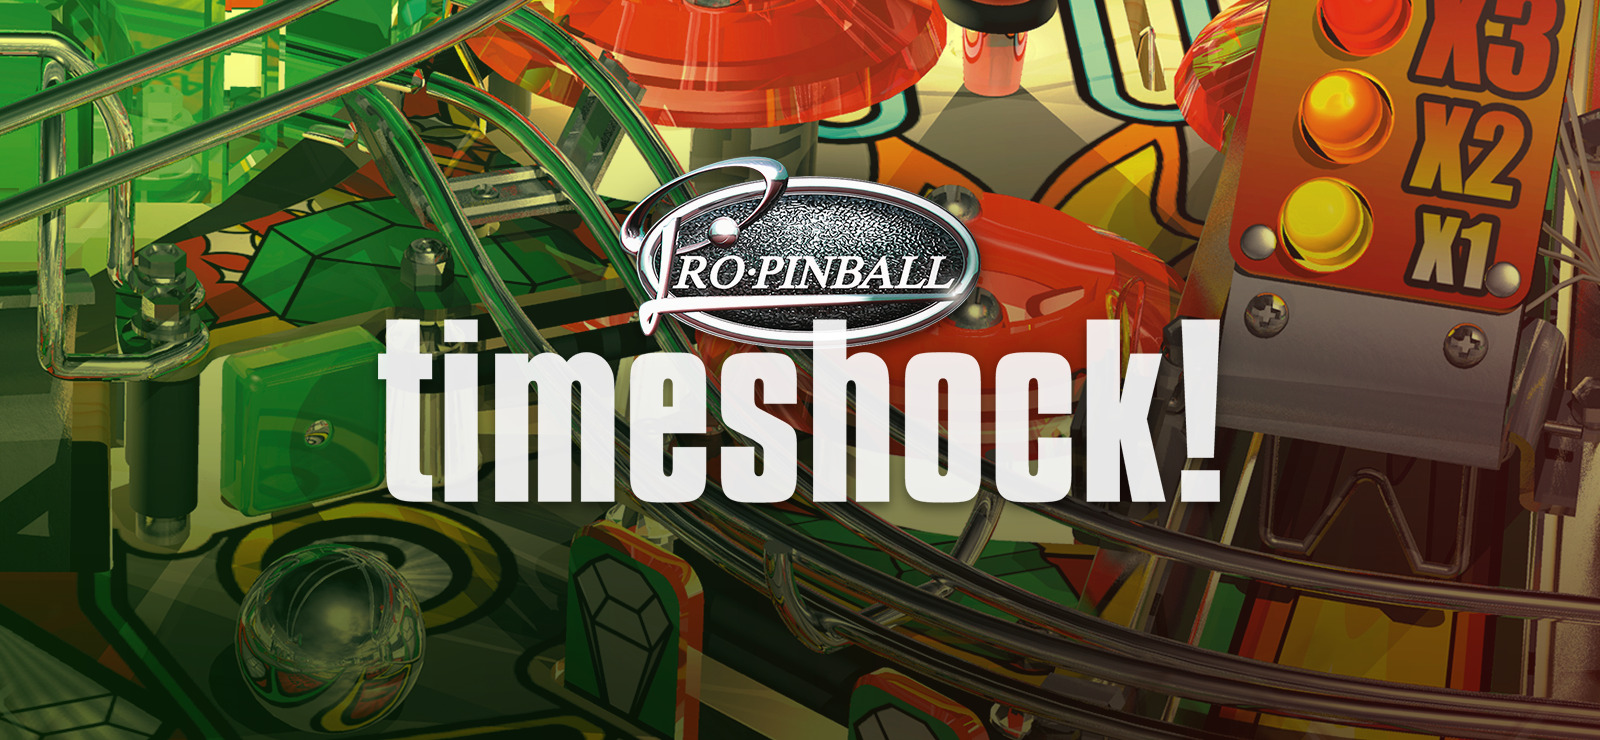 copy timeshock pro pinball cd